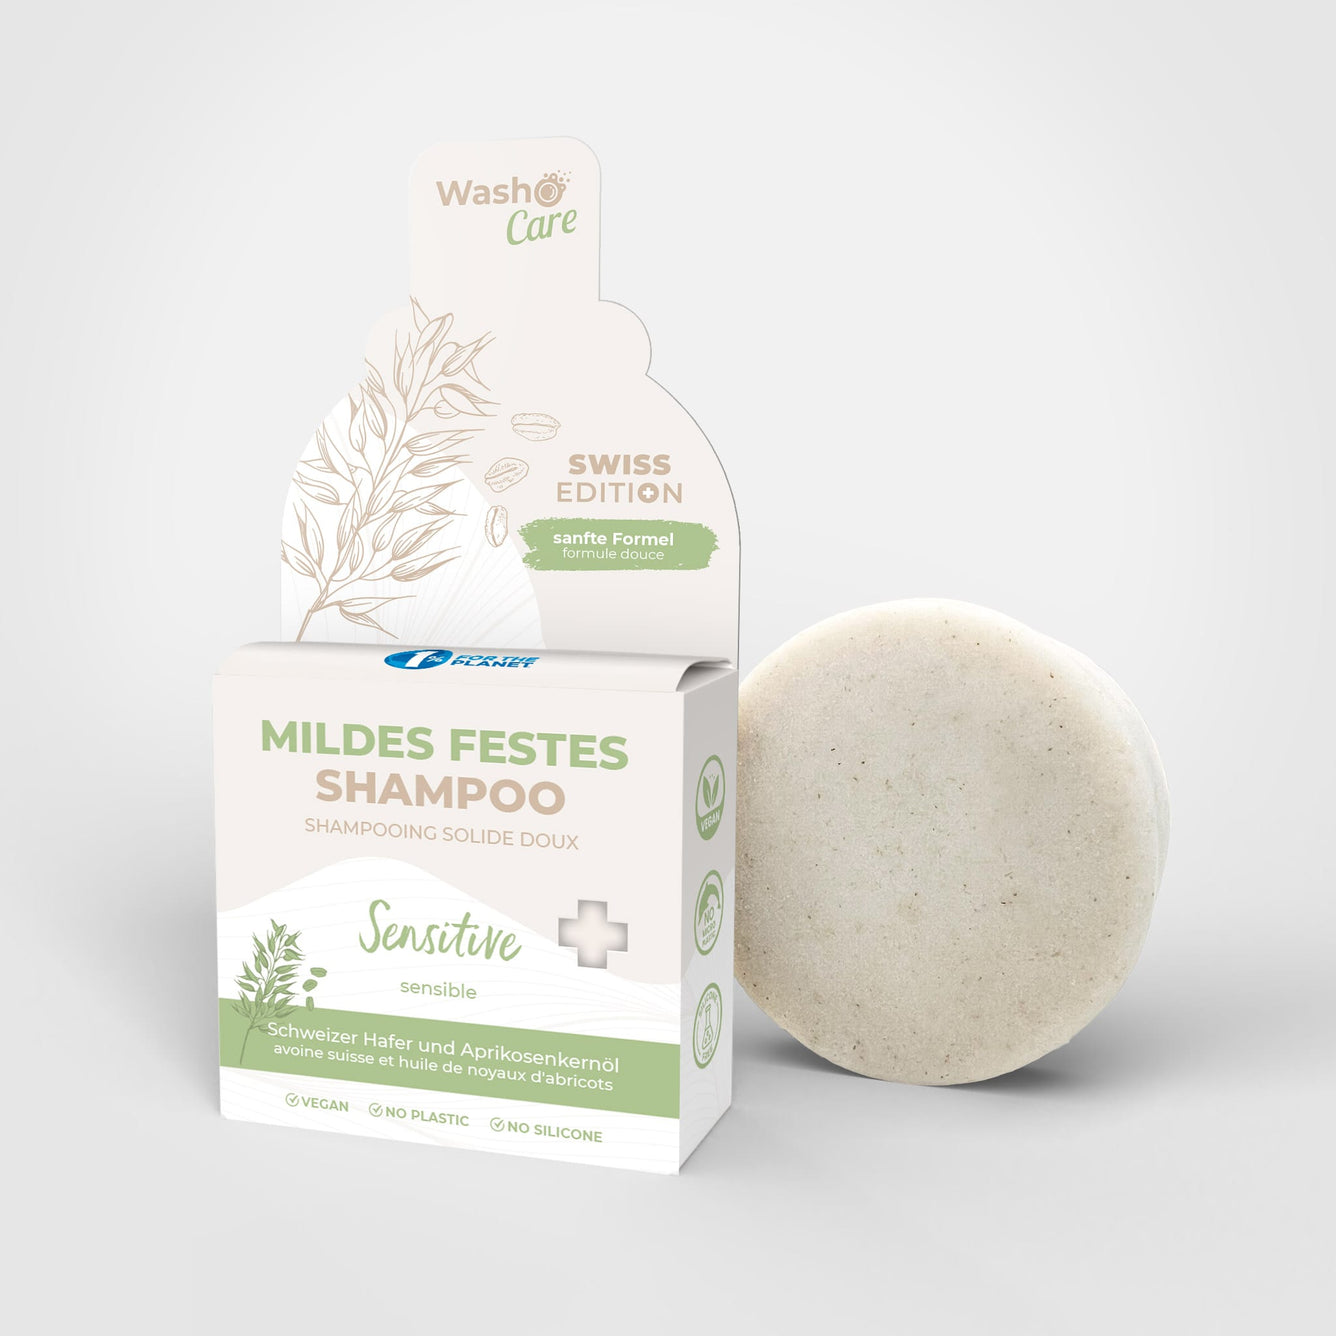 3 Washo Care Swiss Edition Mildes Festes Shampoo Sensitive - washo.ch